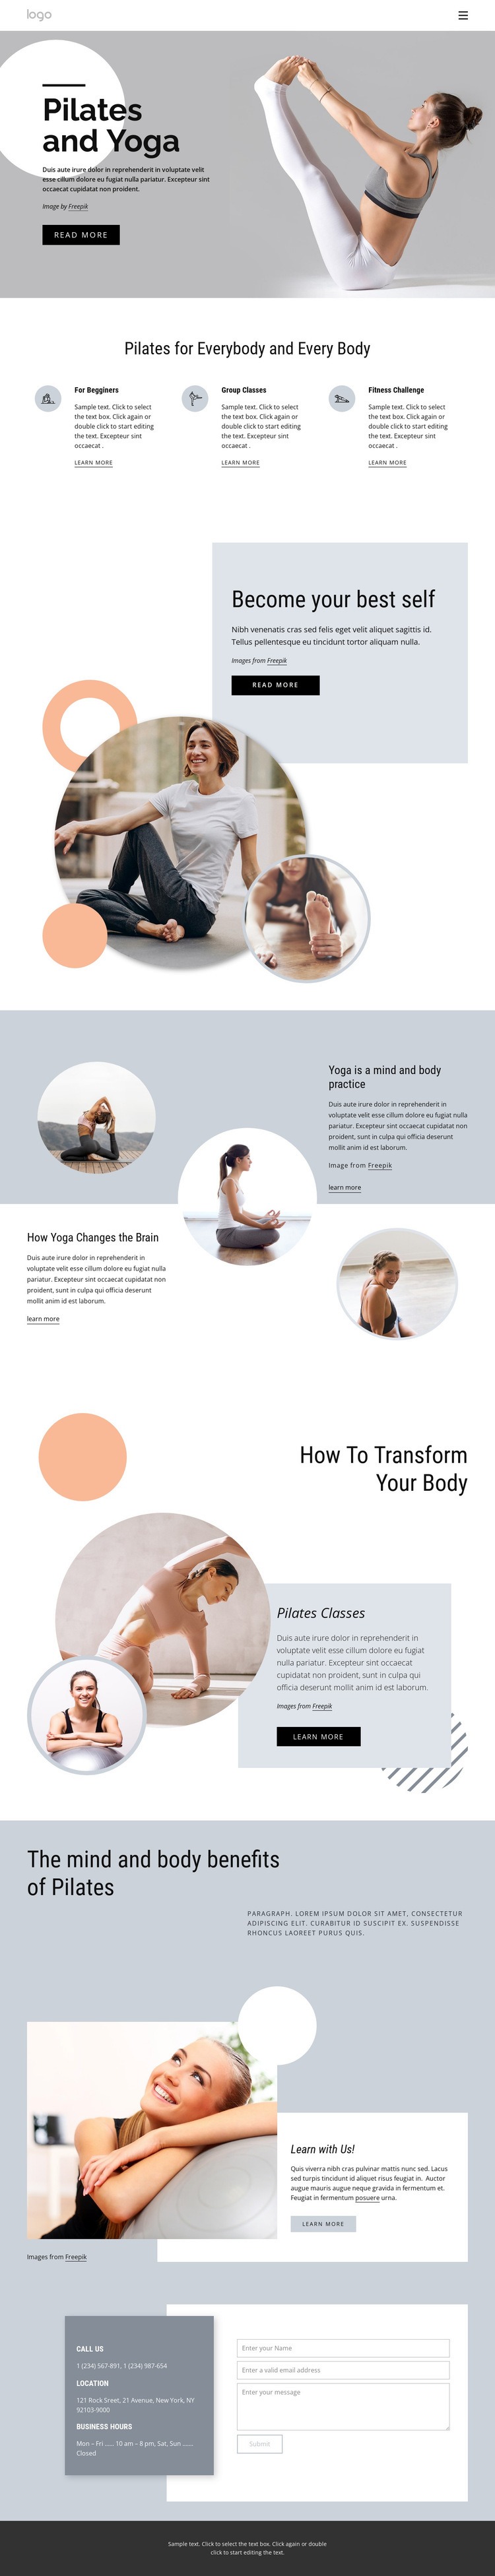 Pilates and yoga center Homepage Design